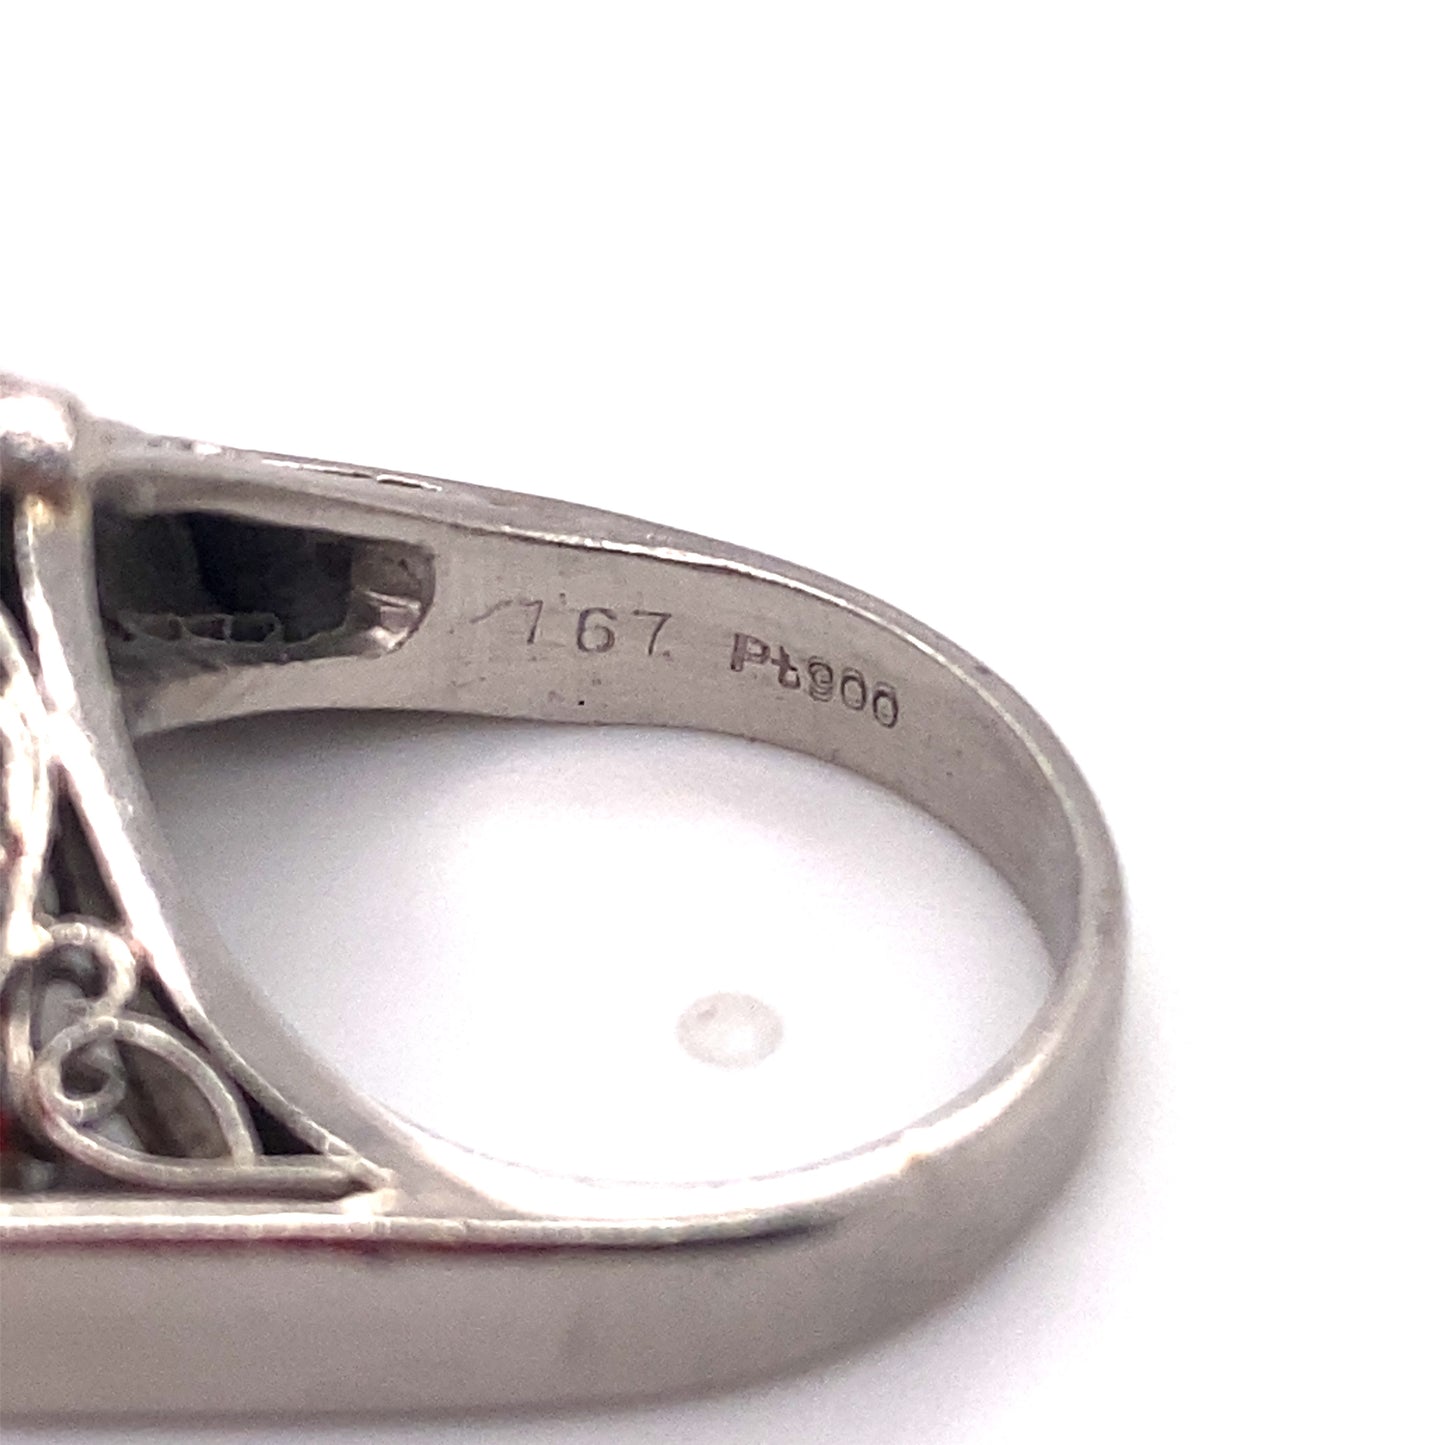 Circa 1950 V-Shaped 1.67 Carat Marquise Diamond Accent Ring in Platinum